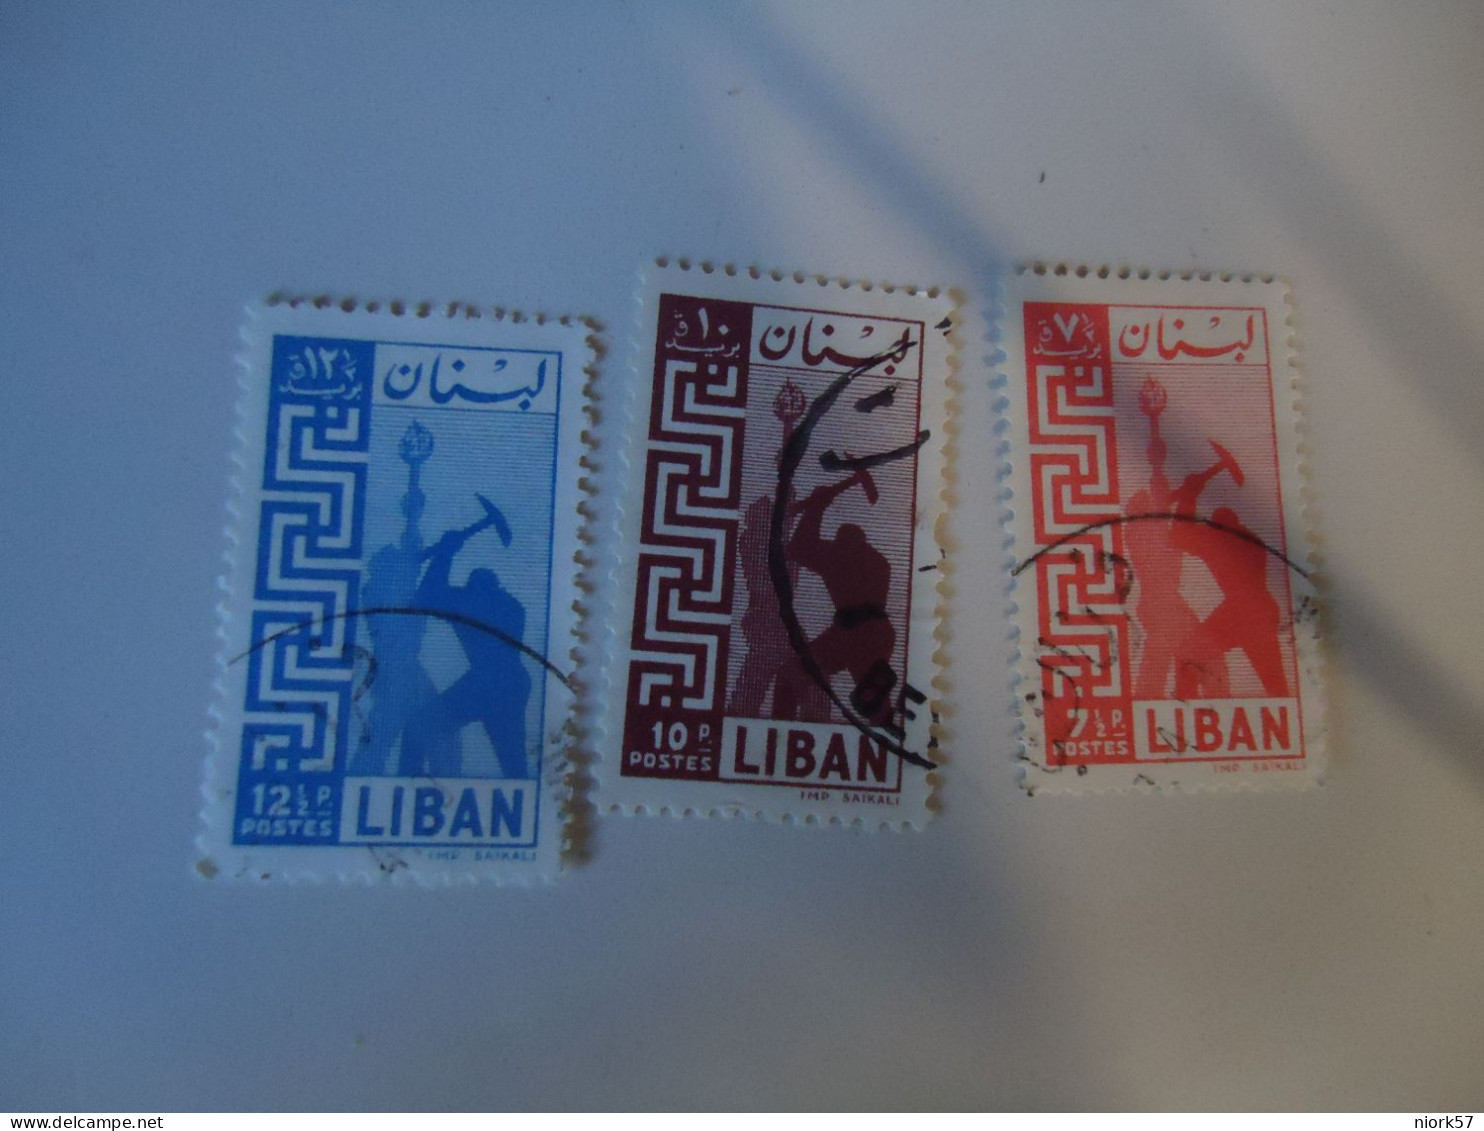 LIBAN  LEBANON USED    3 STAMPS   ANNIVERSARIES - Lebanon